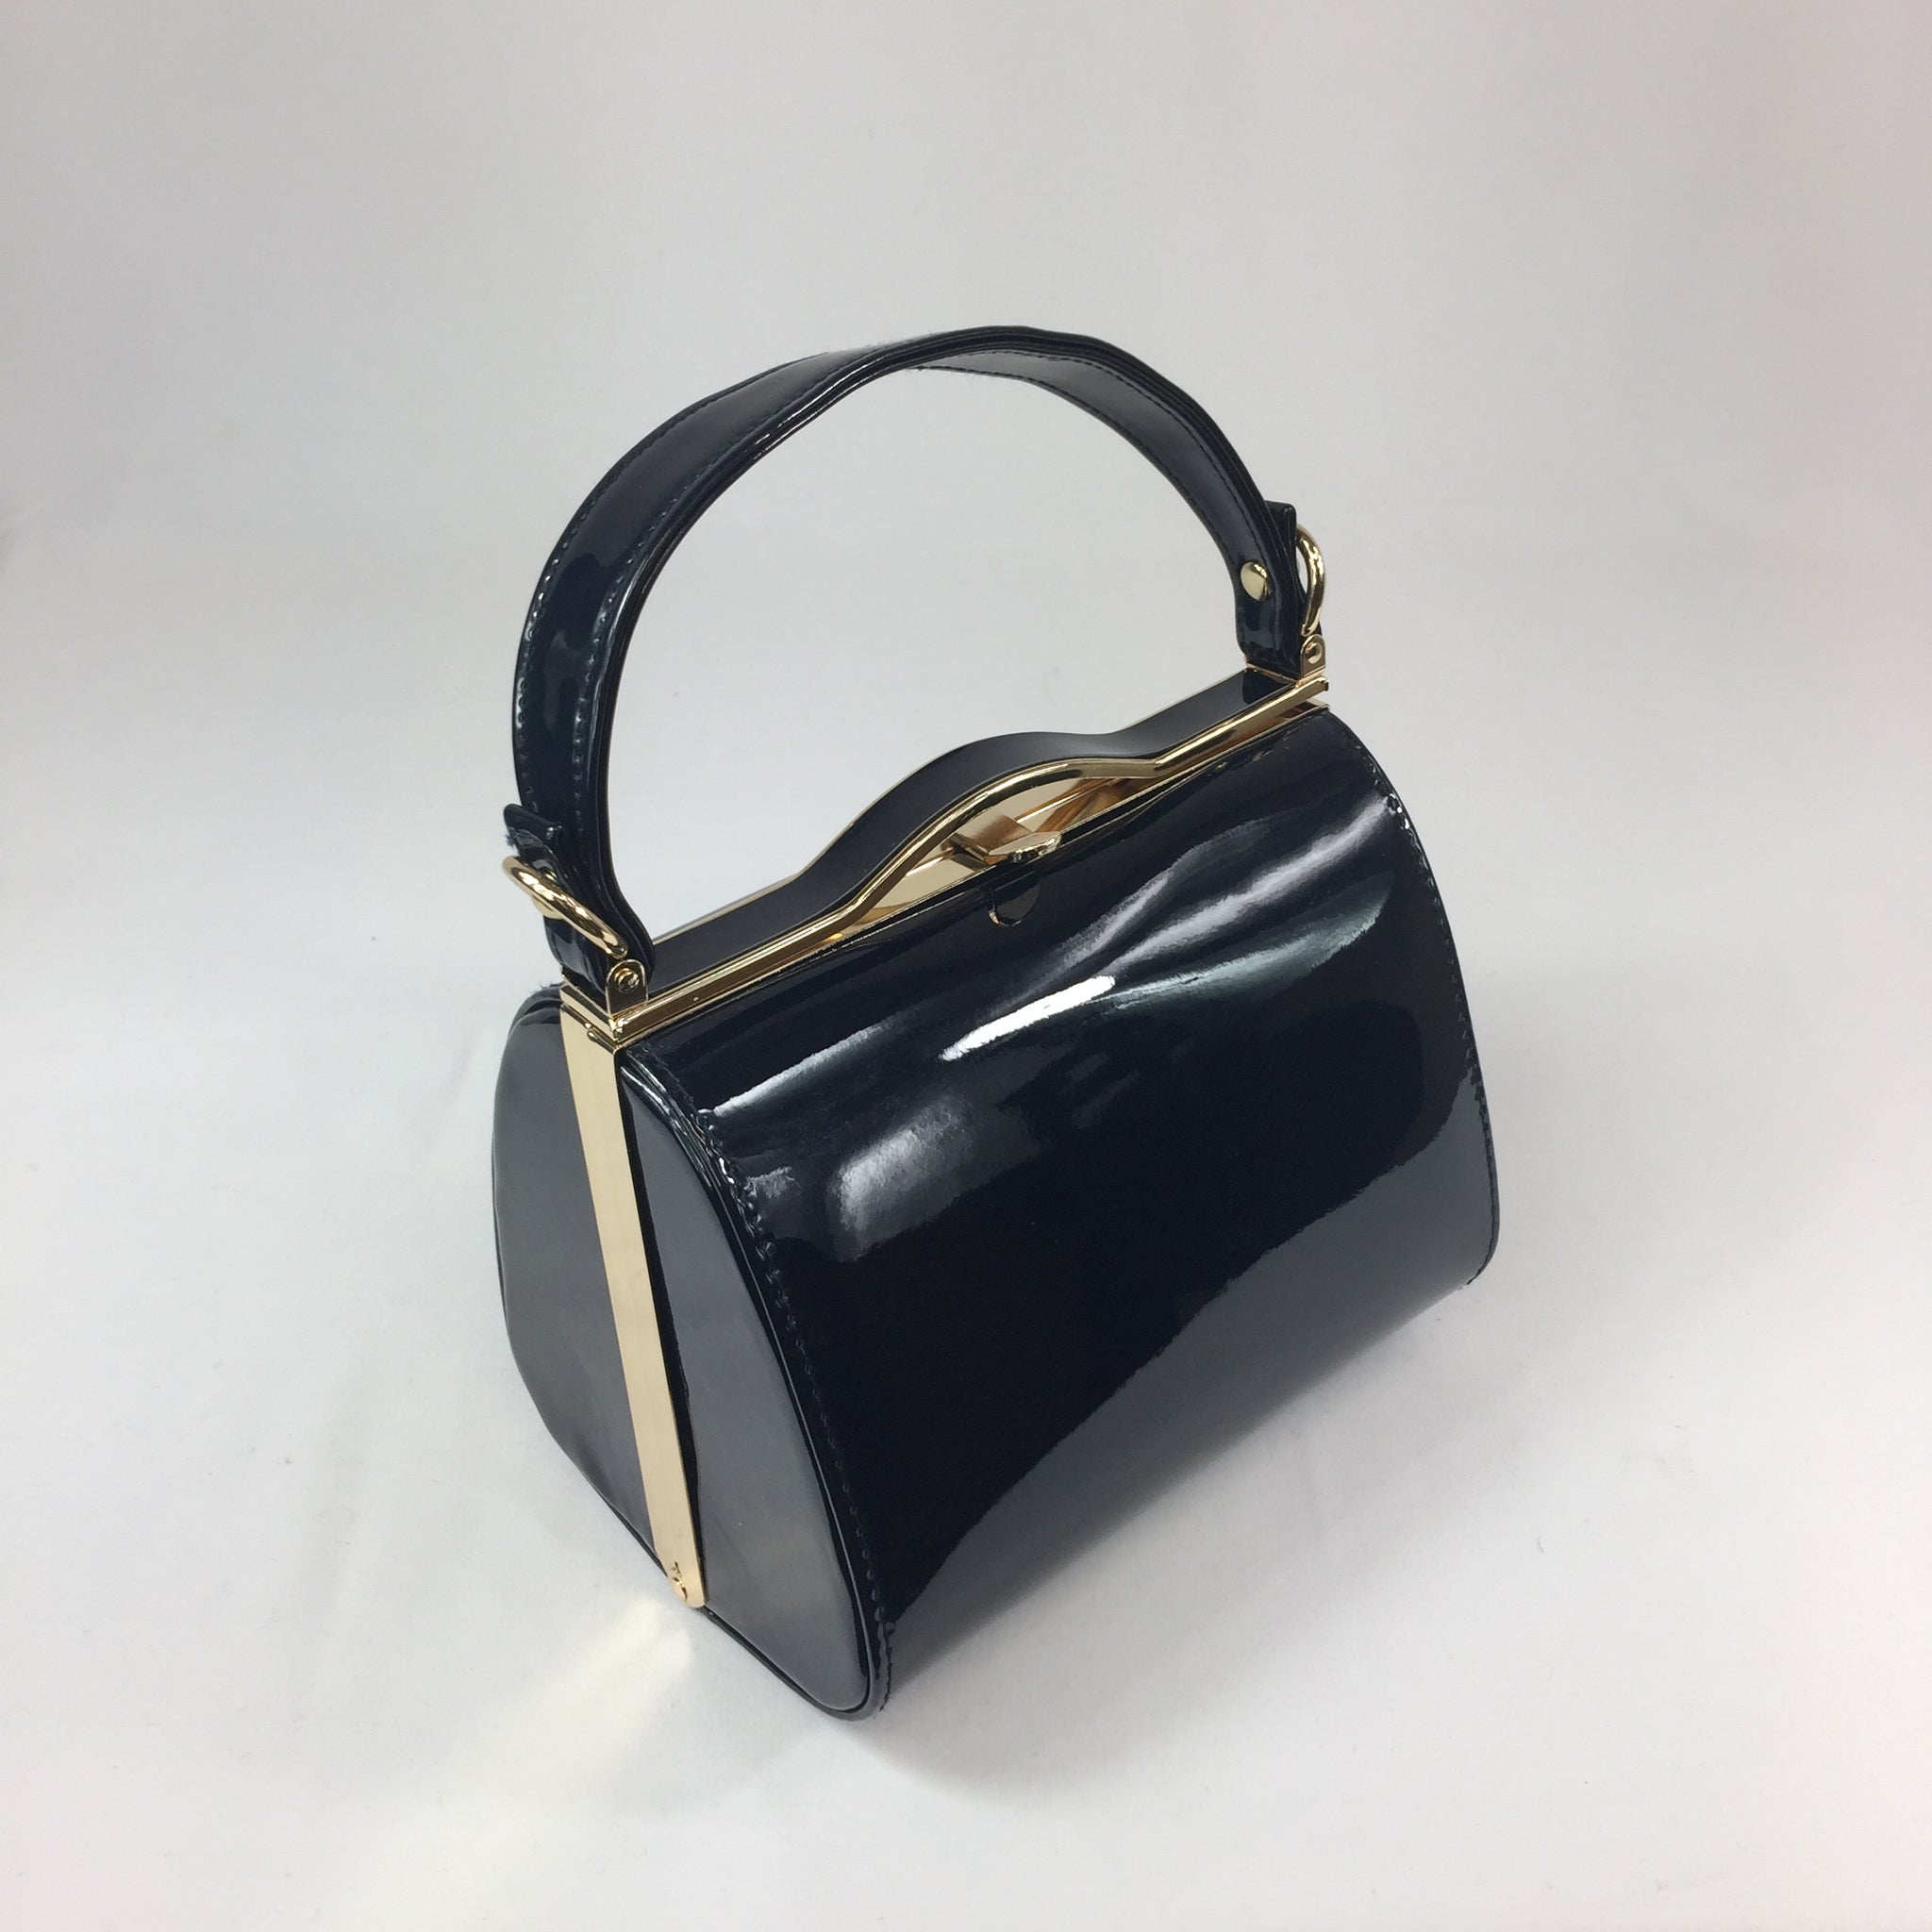 GVSAVY 1 Black Handbag and 1 Sunflower Keychain, Women's Vintage Mini Shoulder Bag, Handbag, Fashion Women's Bag, Simple Women's Bag